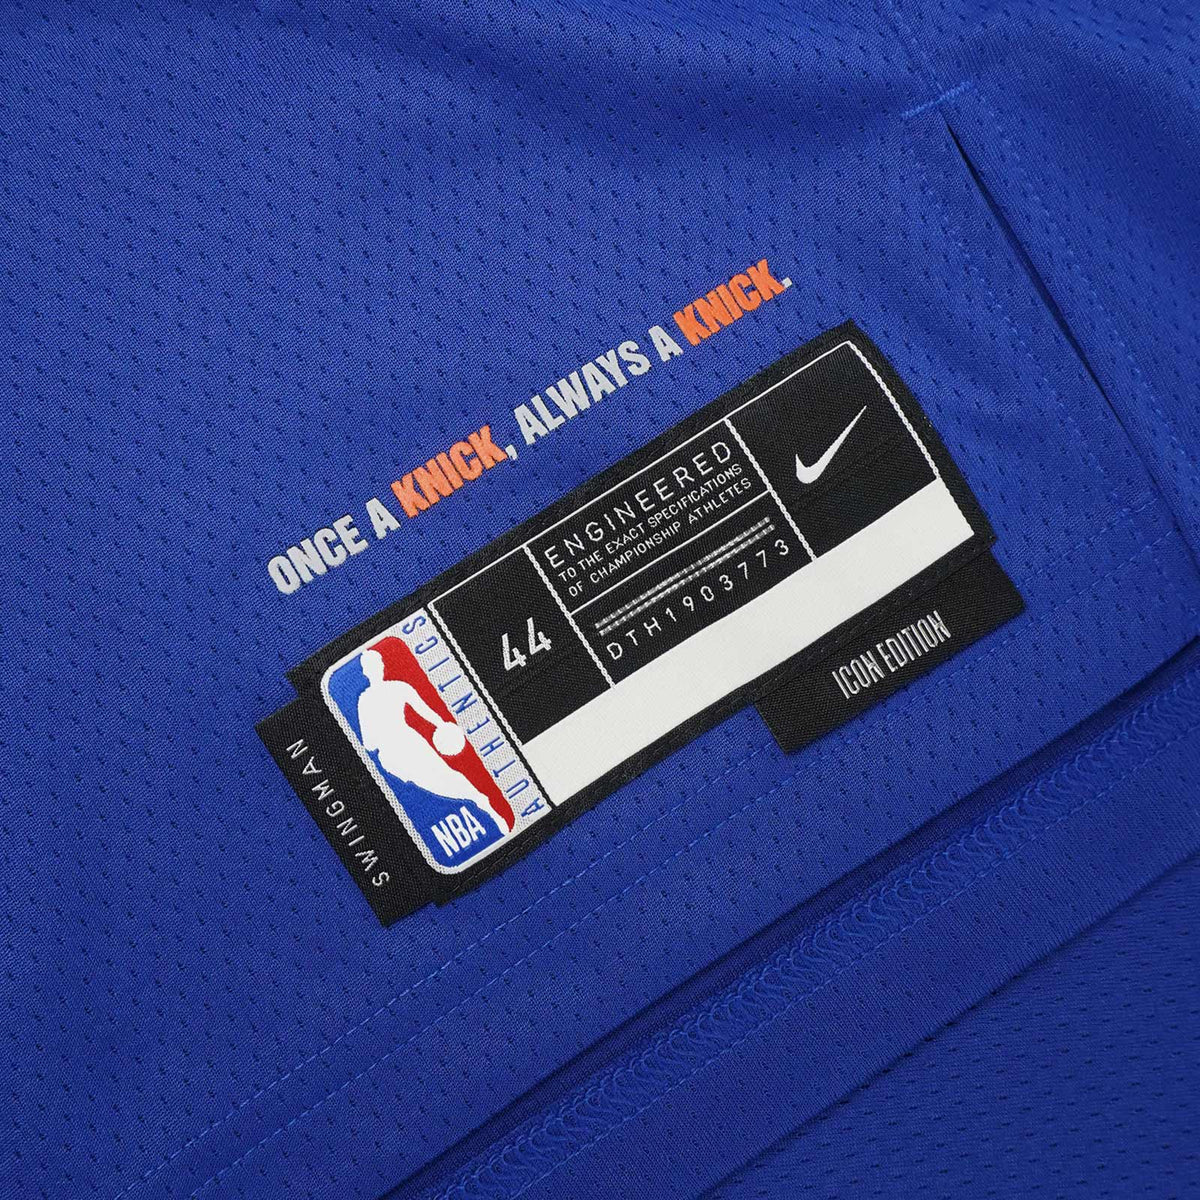 Derrick Rose New York Knicks 2023 Icon Edition Youth NBA Swingman